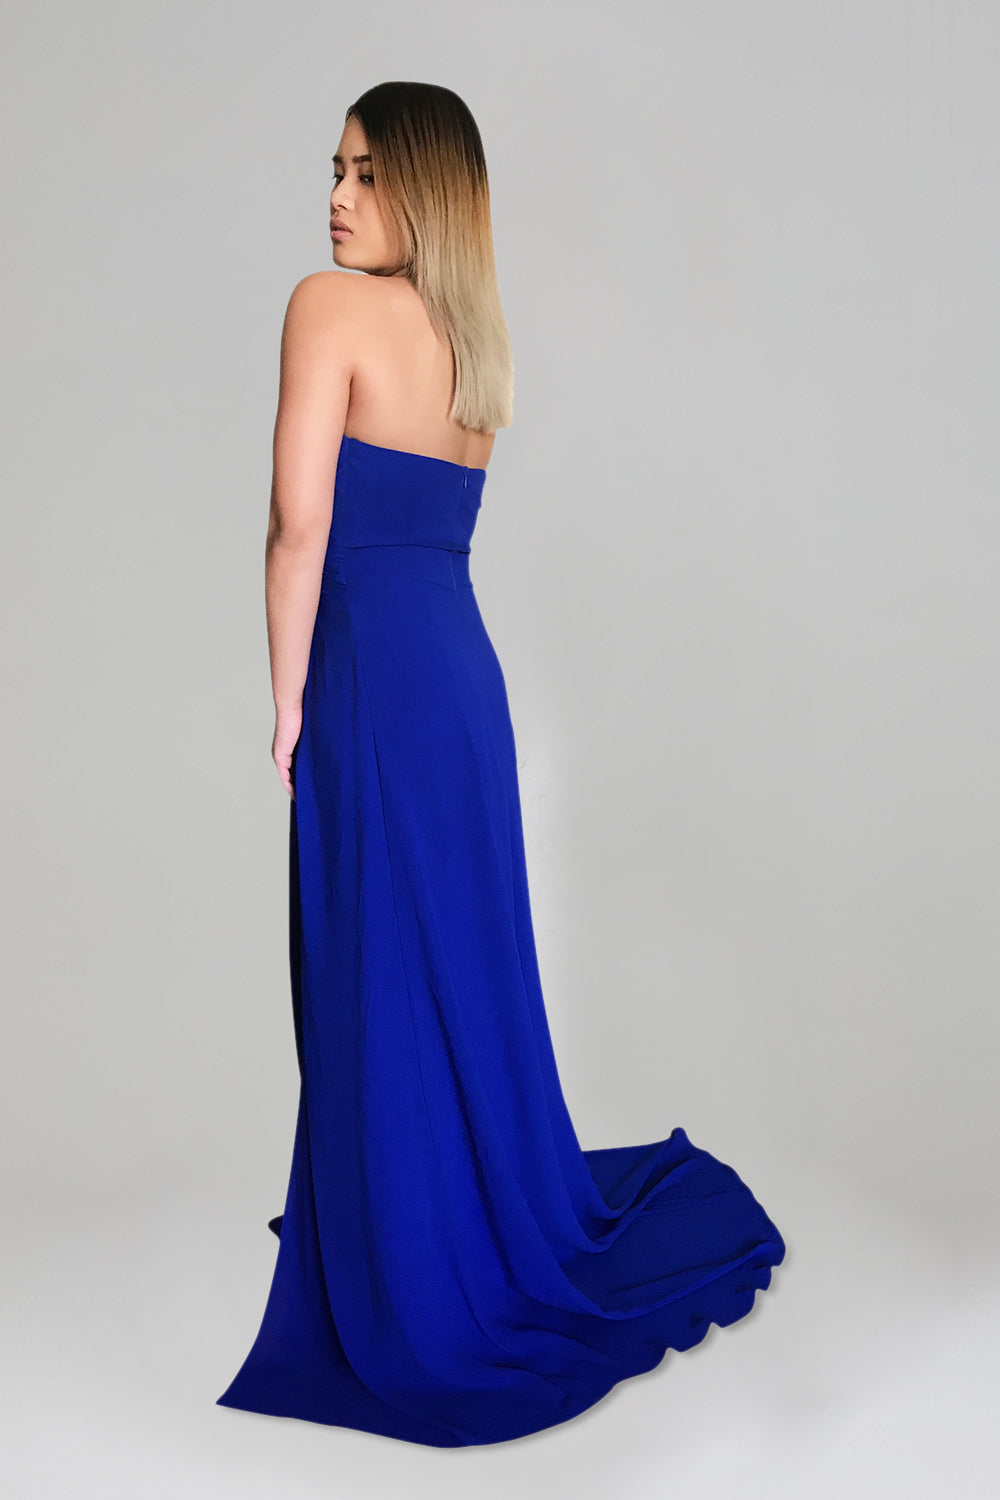 CHERELLE | Strapless Chiffon Cobalt Blue Bridesmaid Dress